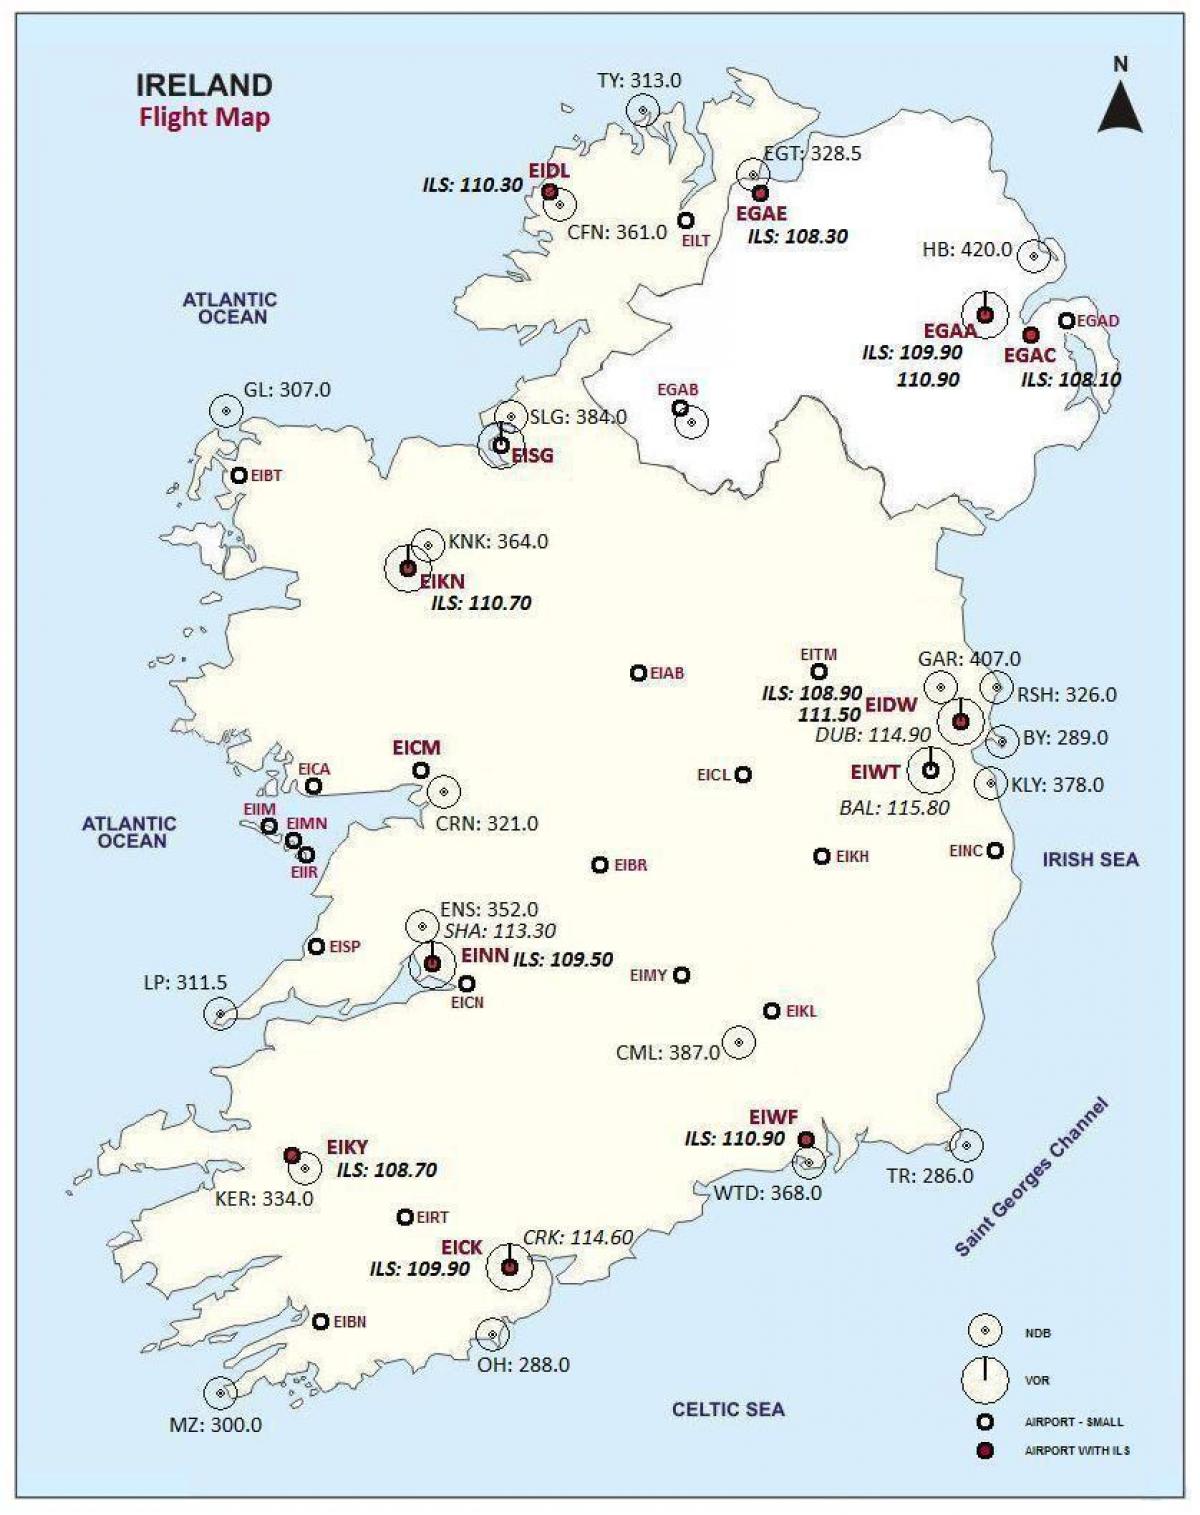 harta e irlandës treguar aeroporte